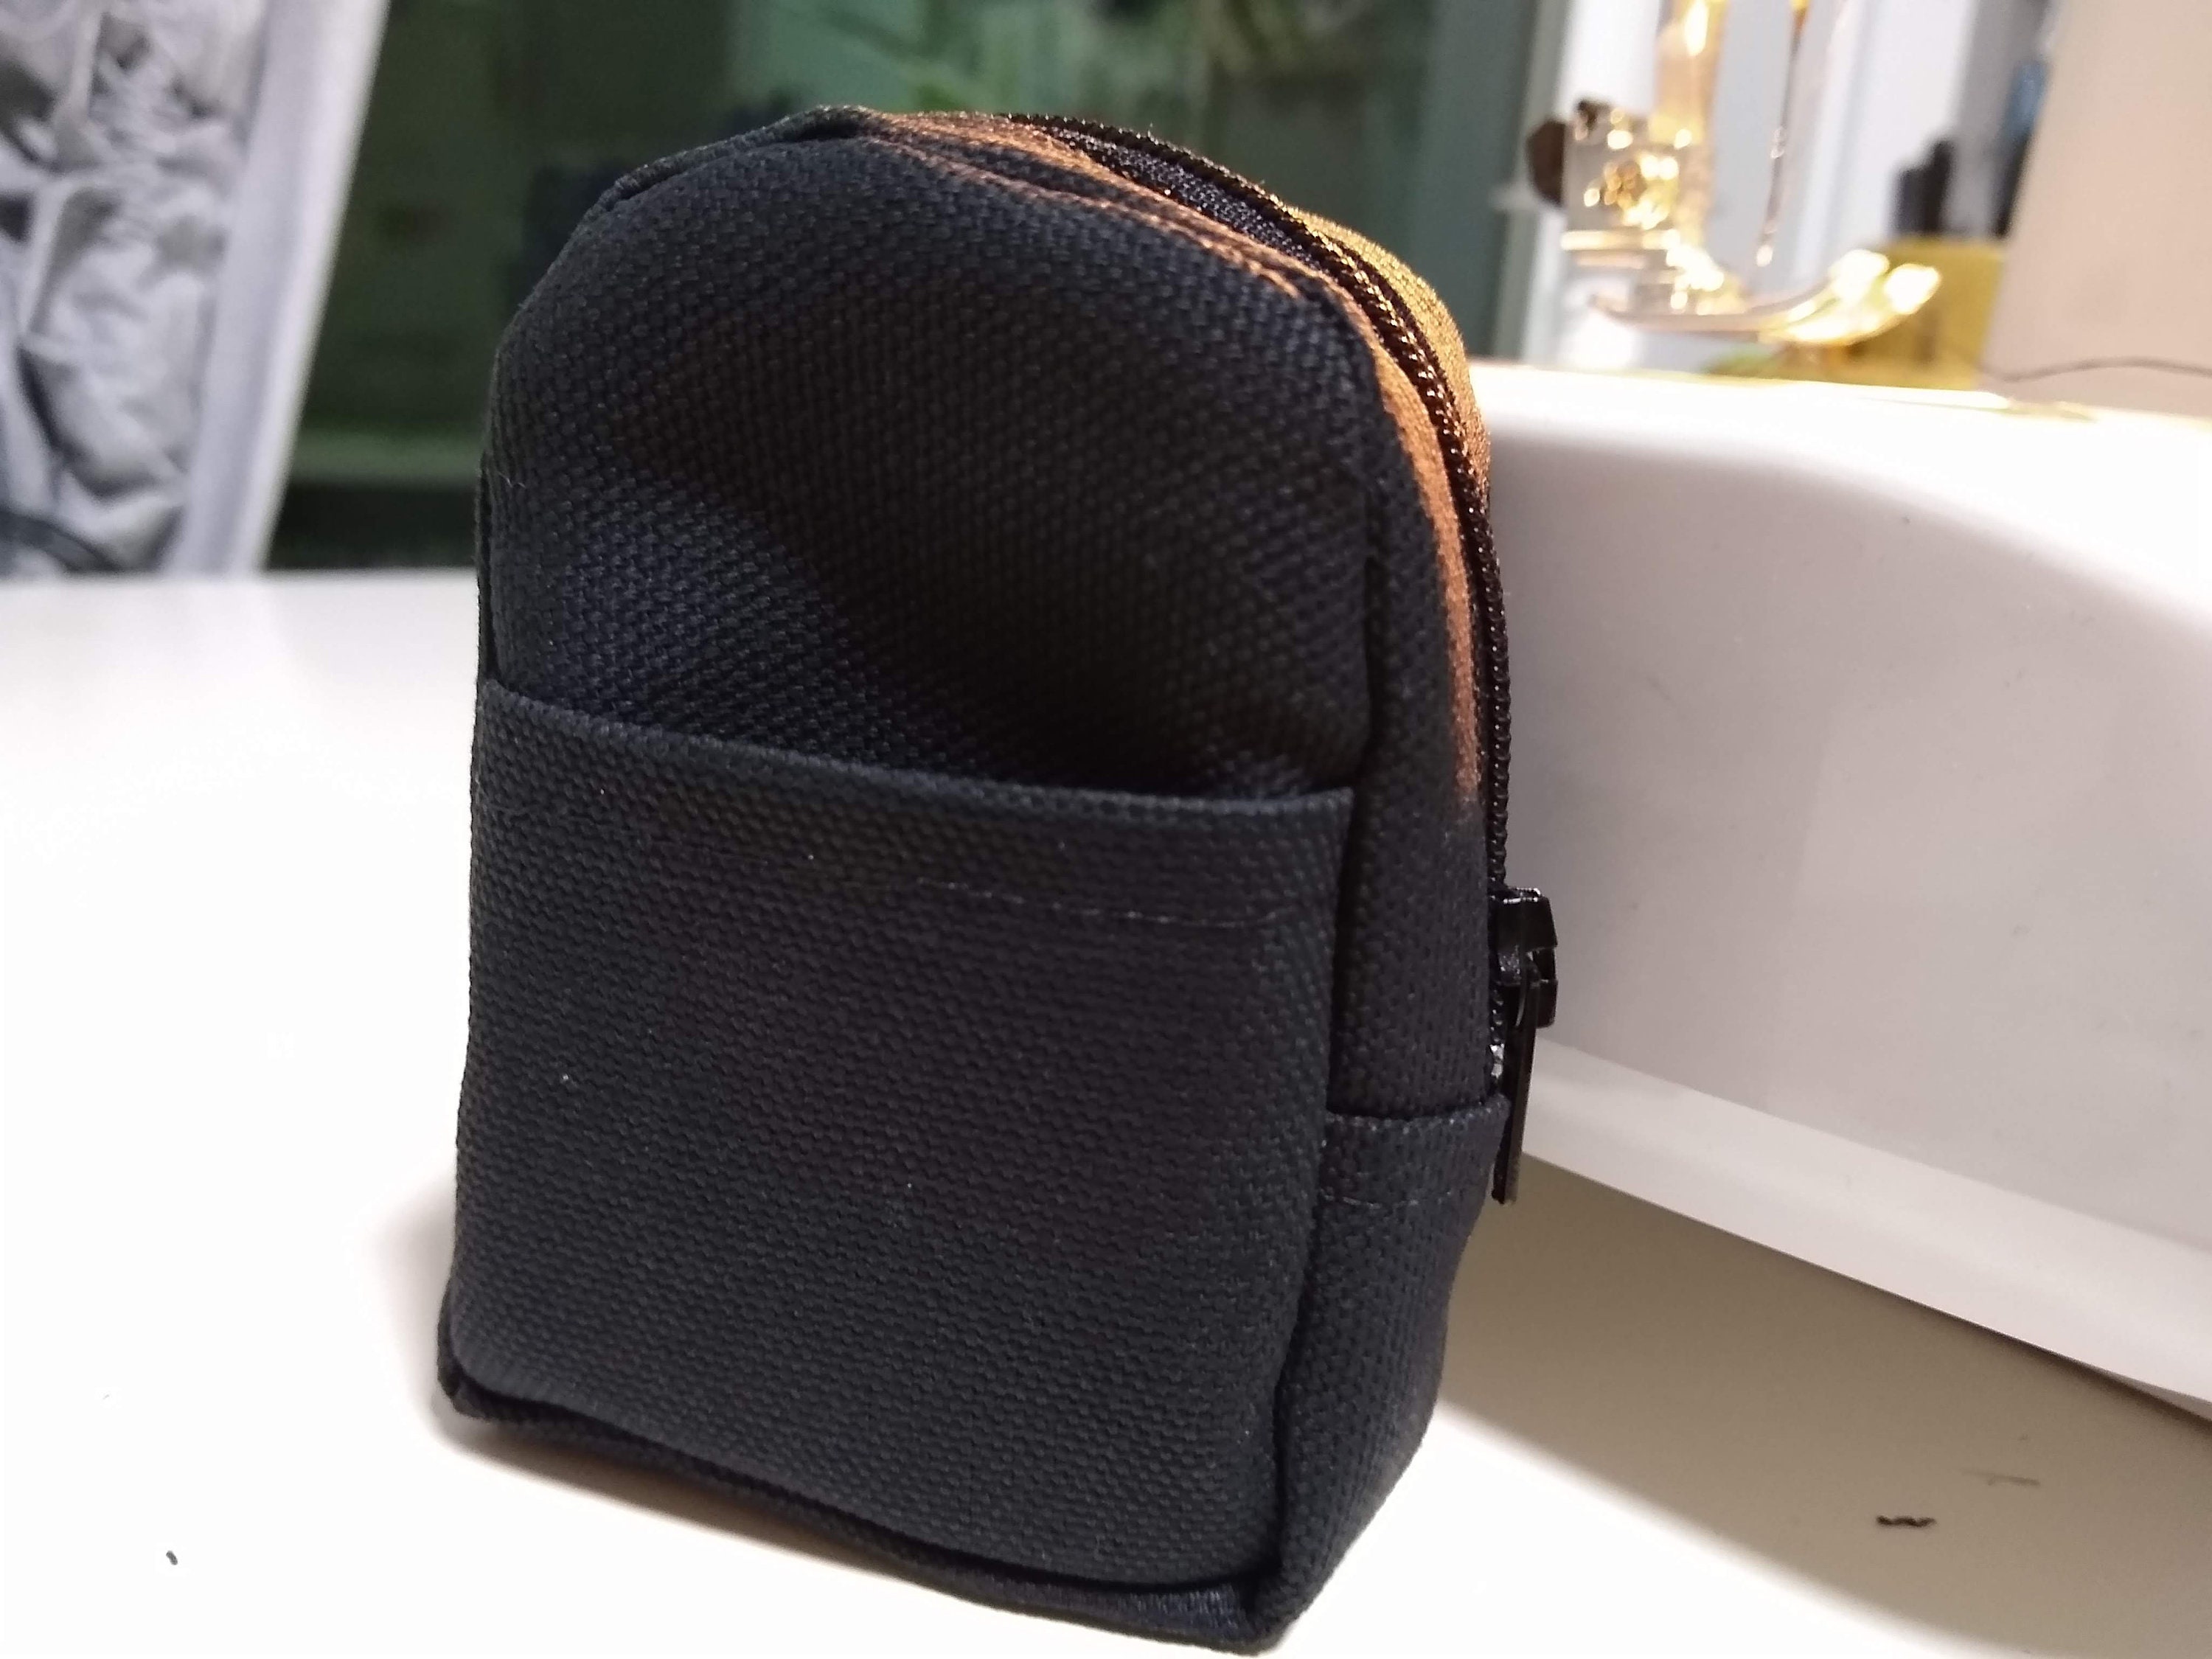 Lipstick Mini Bag Keychain Cute Metal Key Ring Purse Bag Backpack